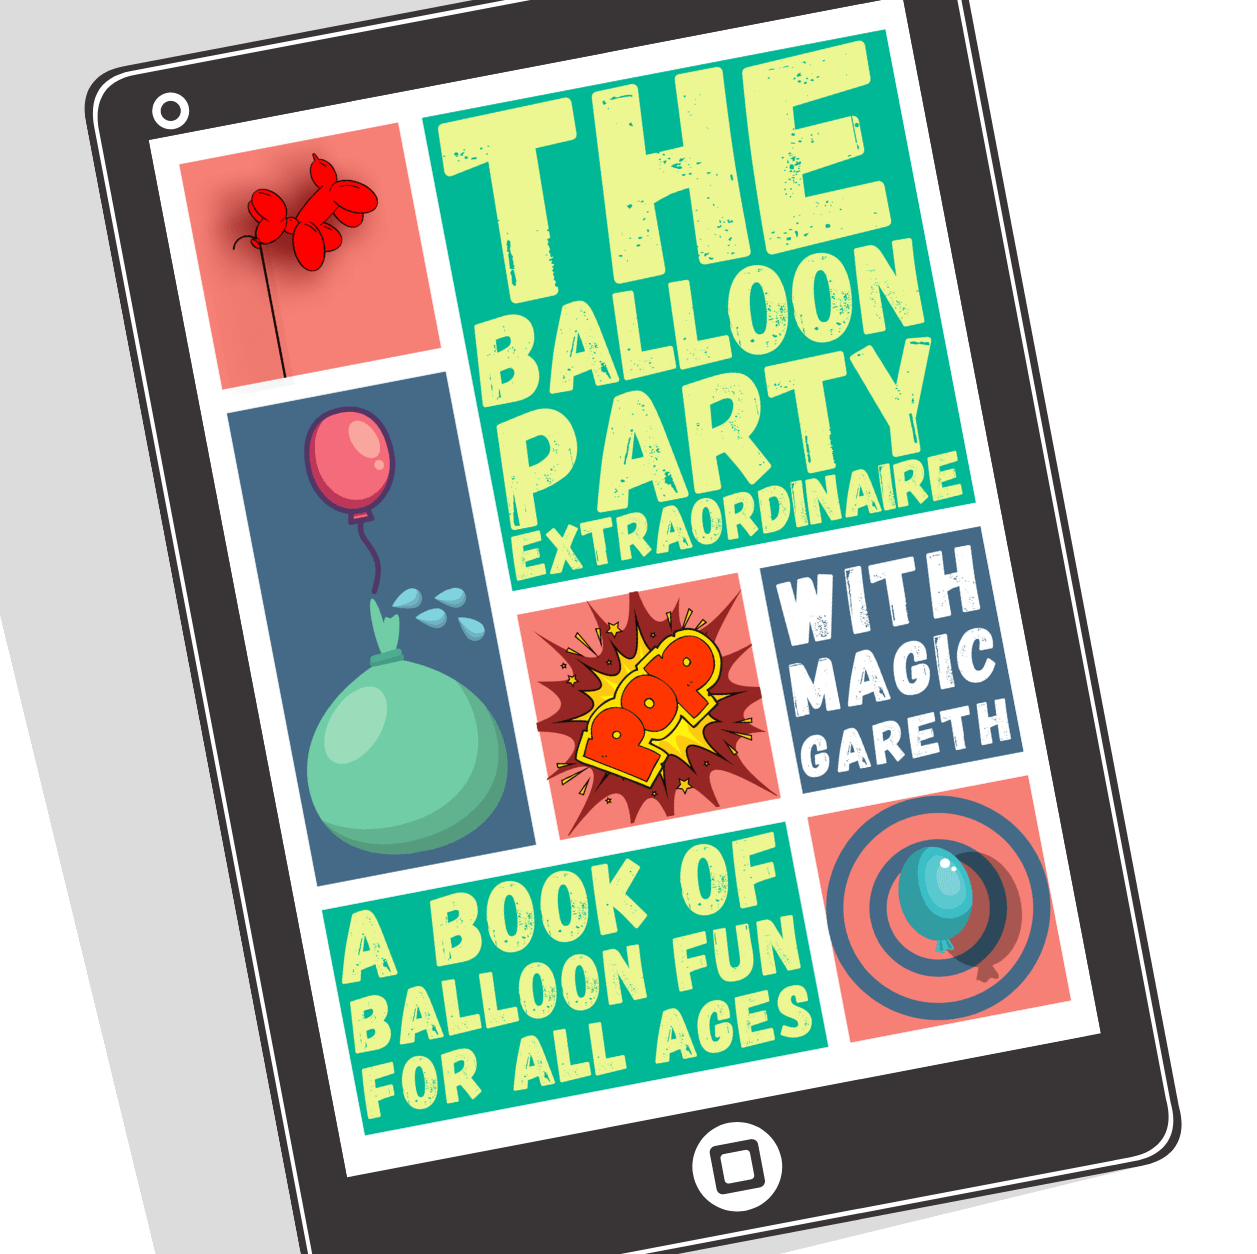 The Balloon Party Extraordinaire with Magic Gareth